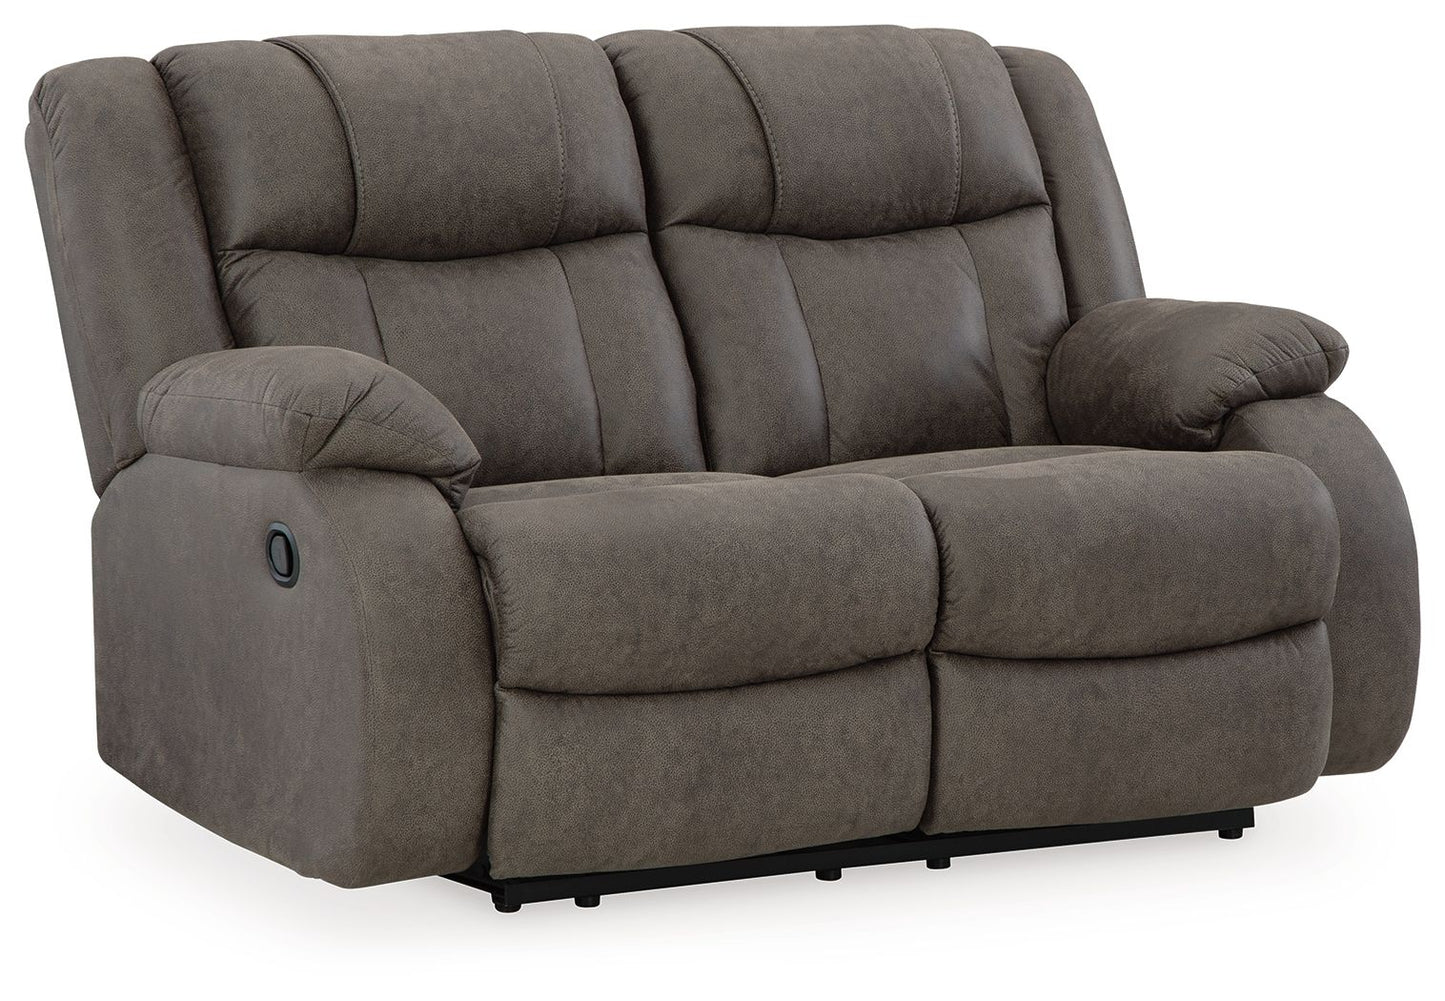 First Base - Gunmetal - 3 Pc. - Reclining Sofa, Reclining Loveseat, Rocker Recliner